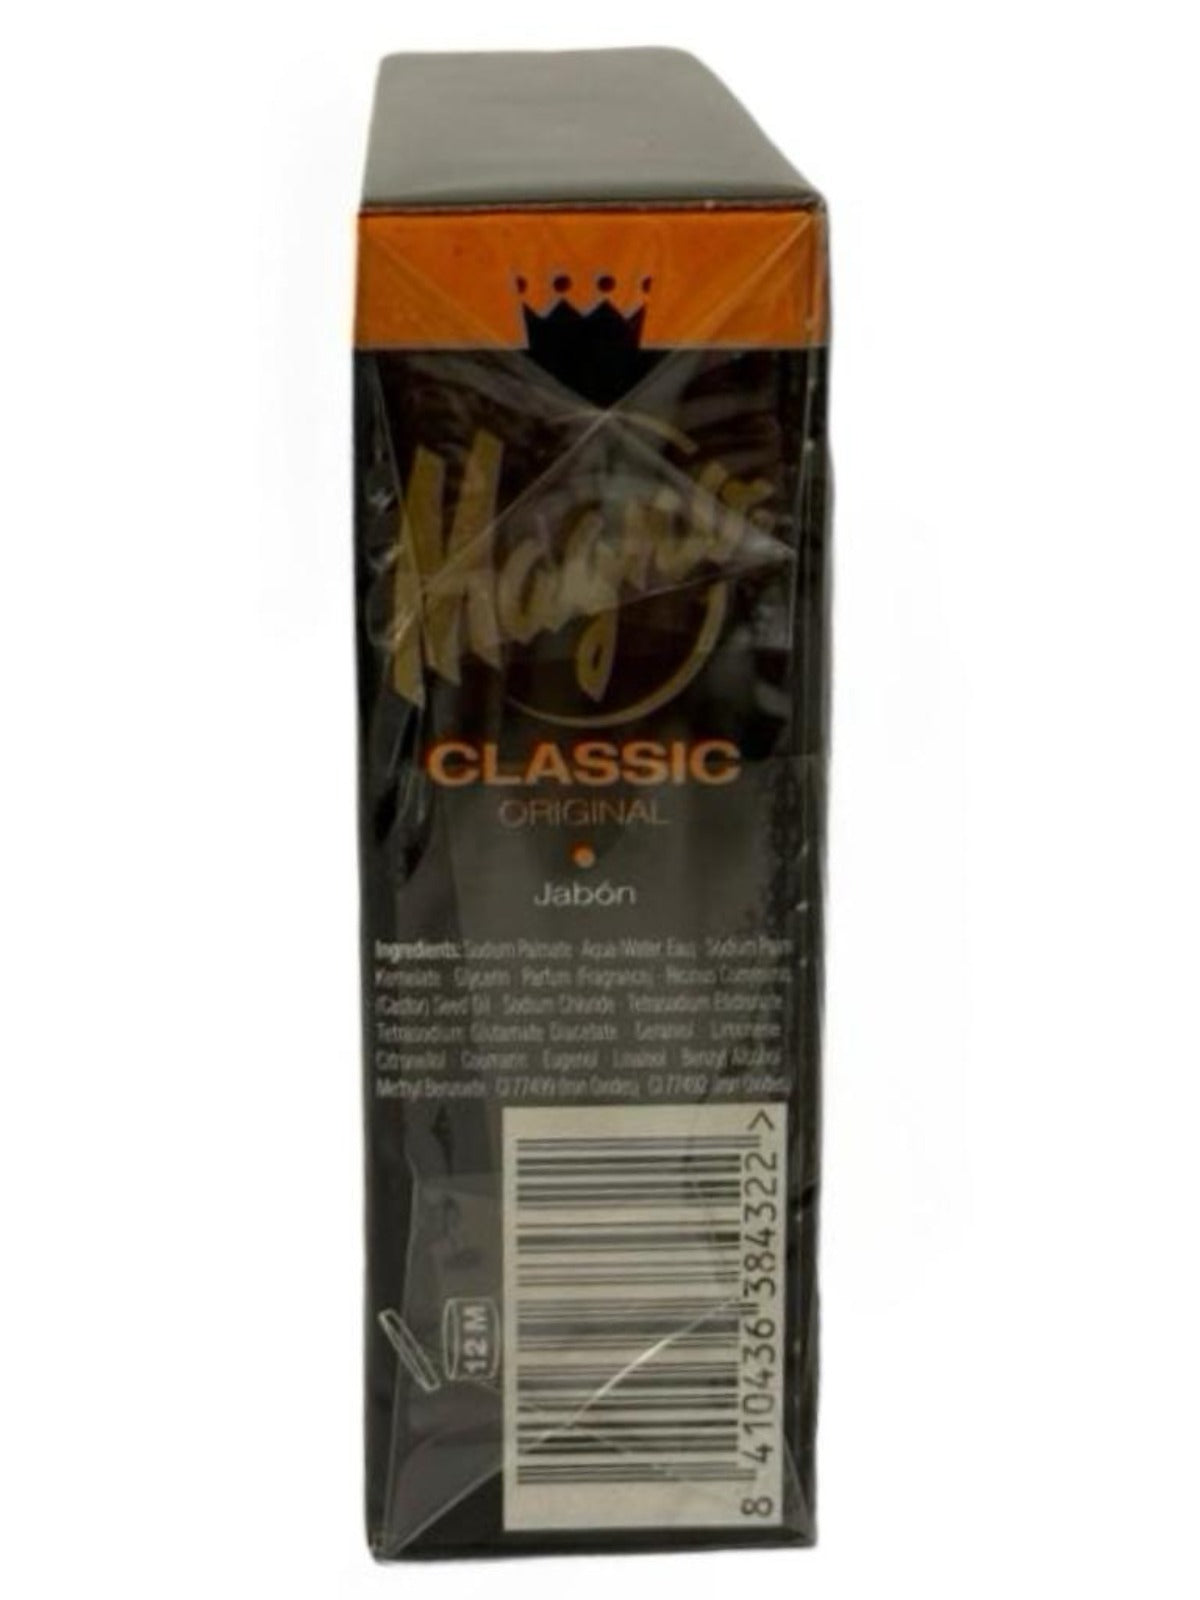 Magno Classic Original Soap Bar 100g